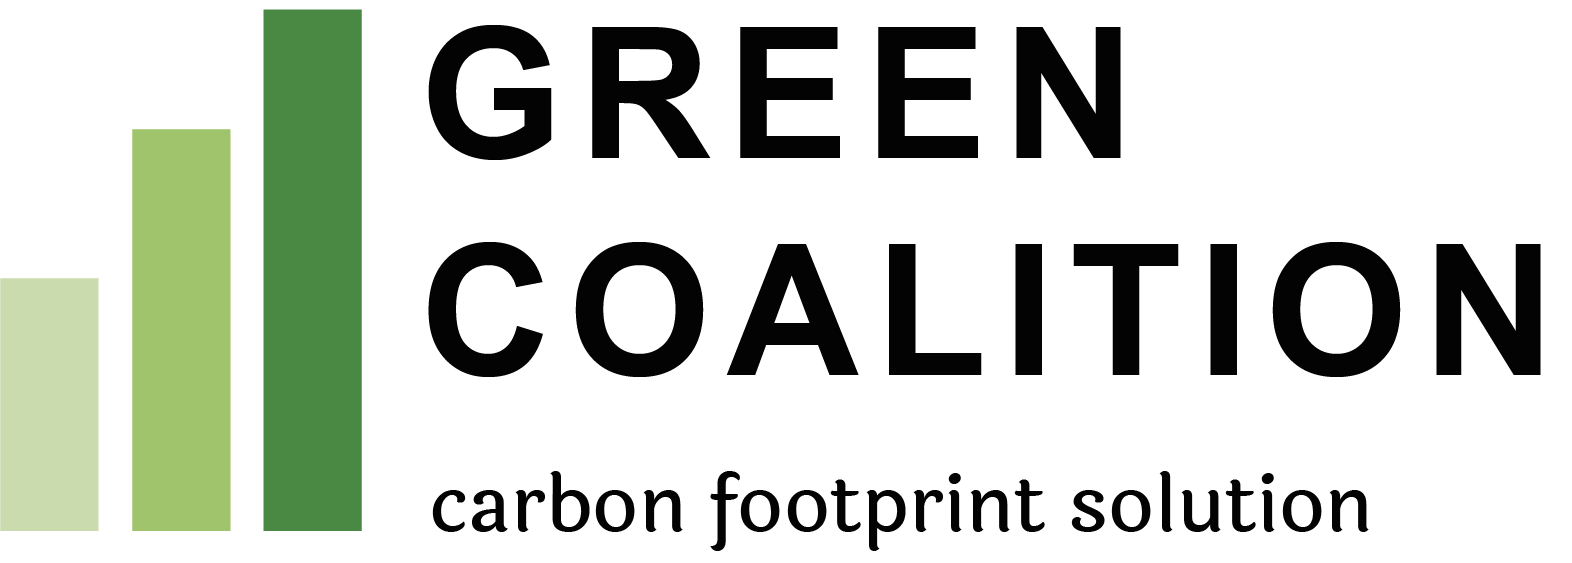 Green Coalition